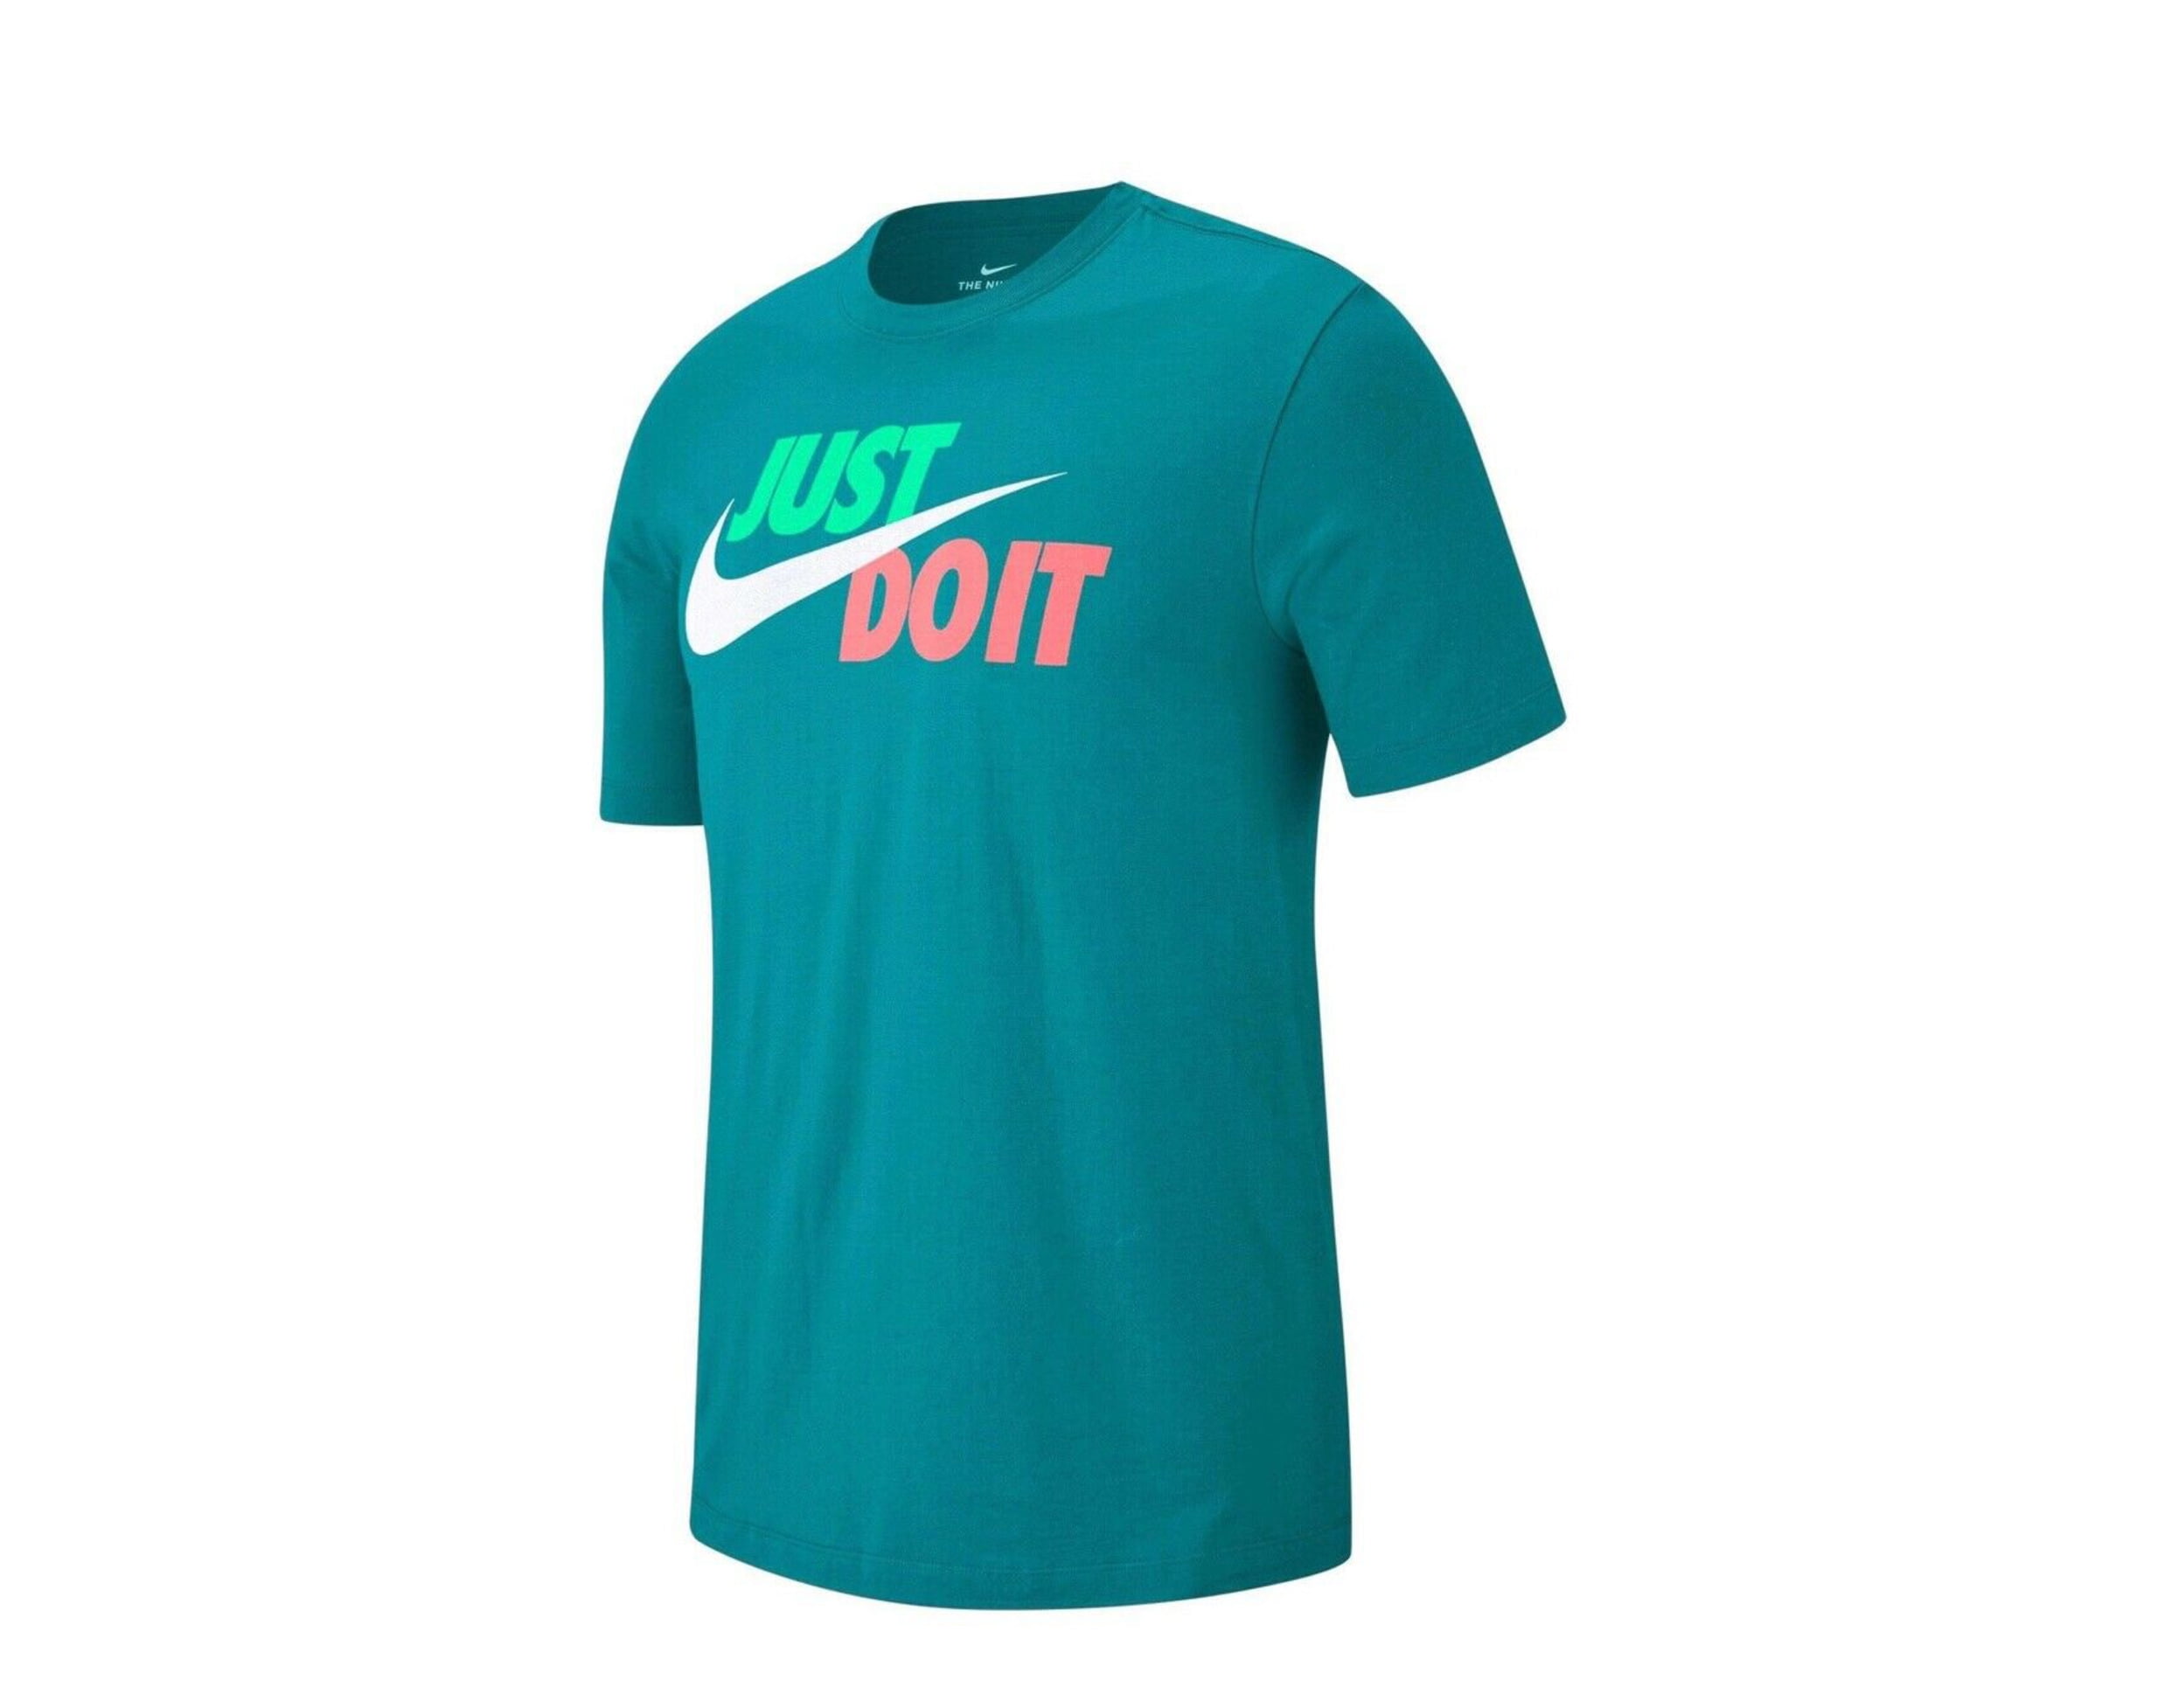 Nike Sportswear Just Do It Teal/Green/Pink Men's Tee Shirt AR5006-366 ...